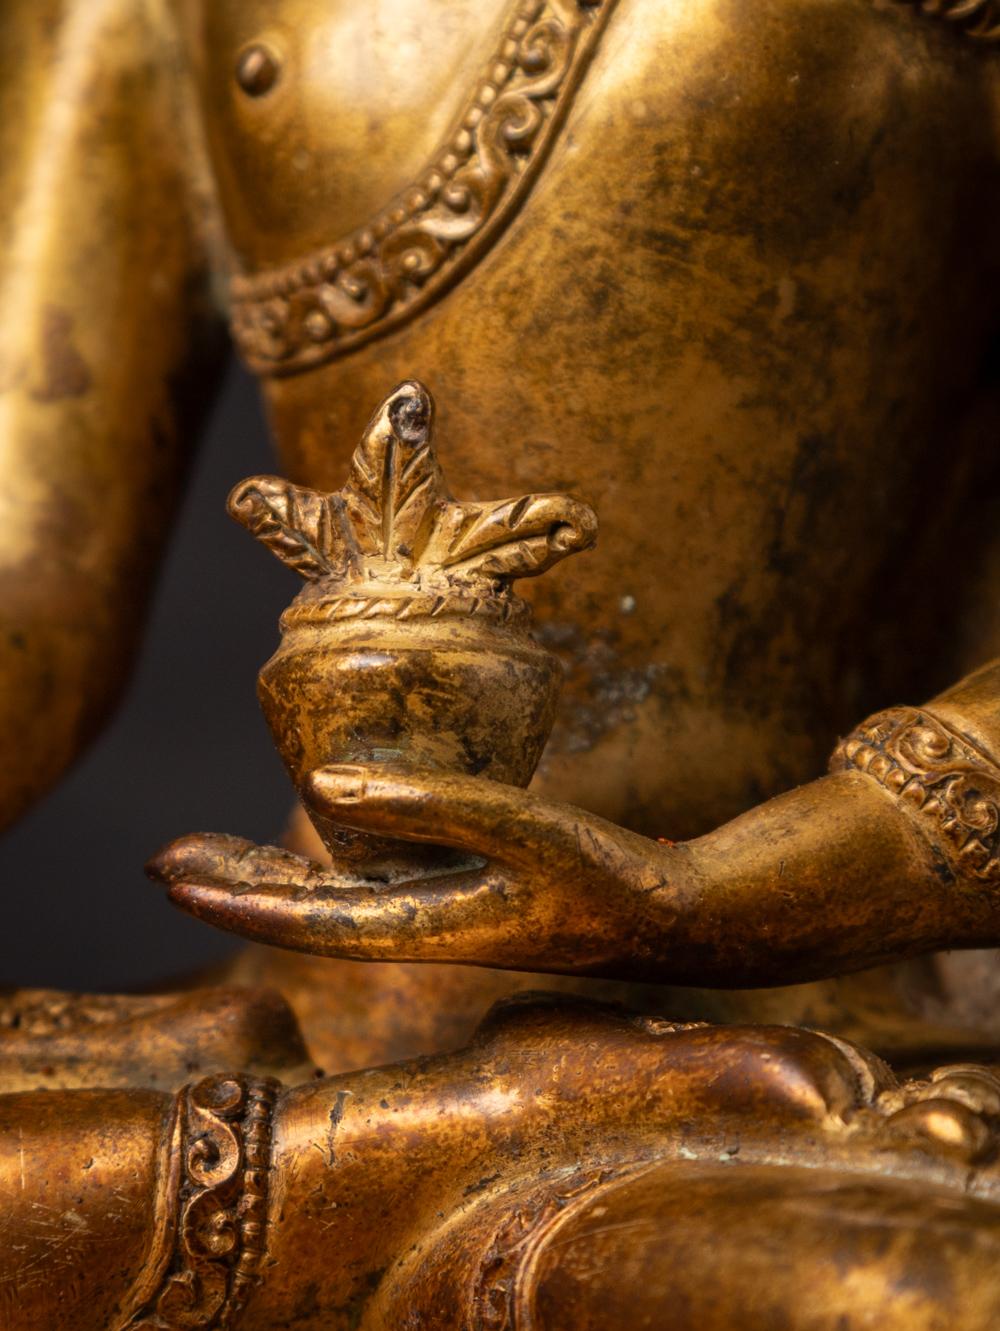 Middle 20th century old bronze Nepali Medicine Buddha statue - OriginalBuddhas 8